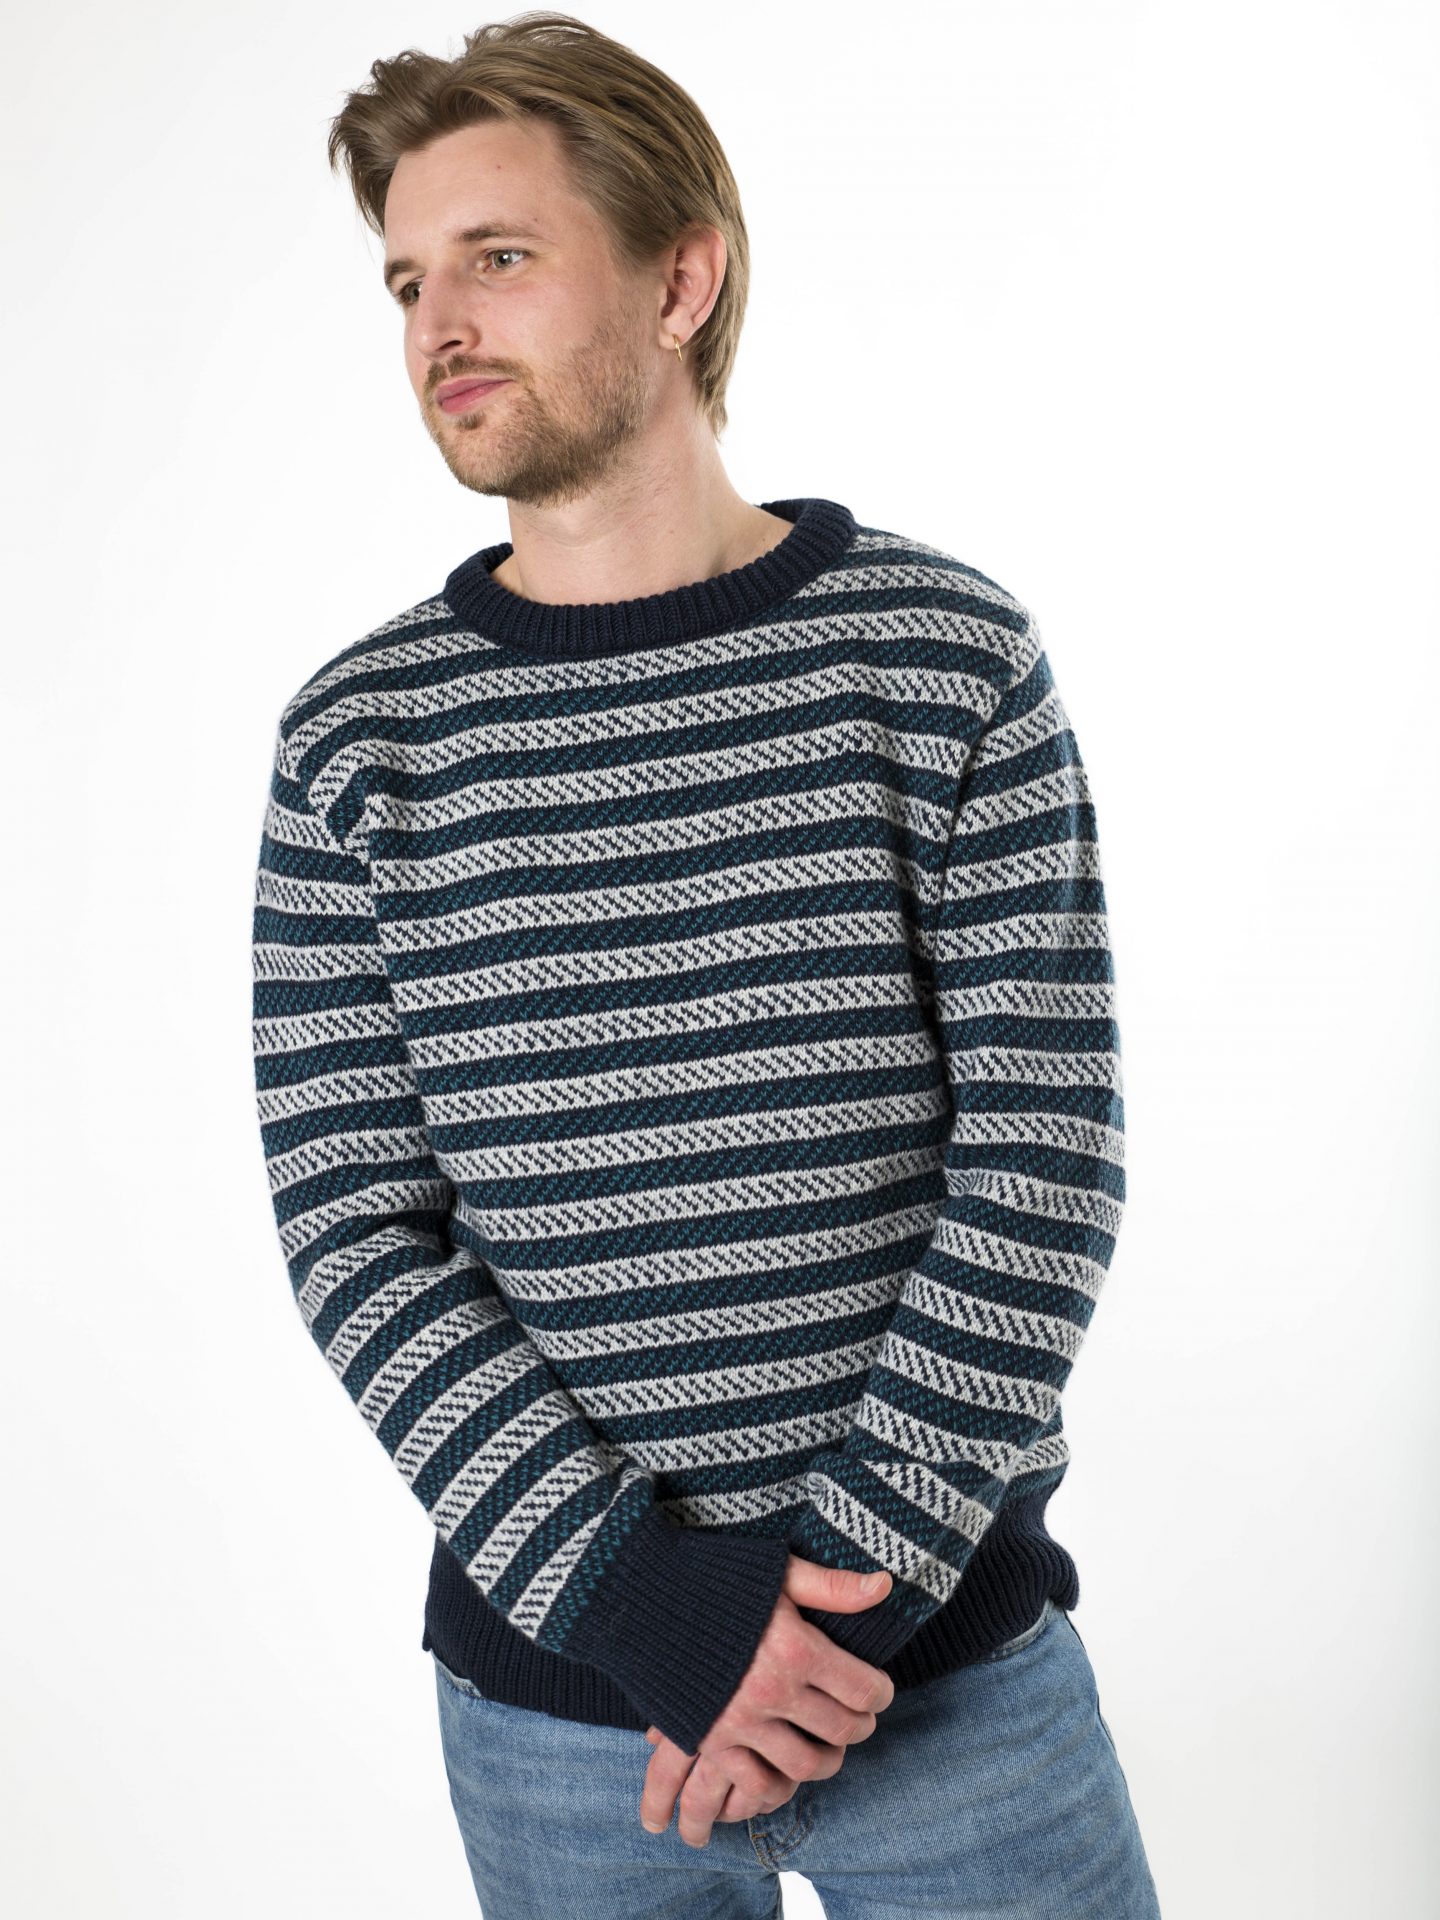 Maglione DANE stile scandinavo da uomo in pura lana merino